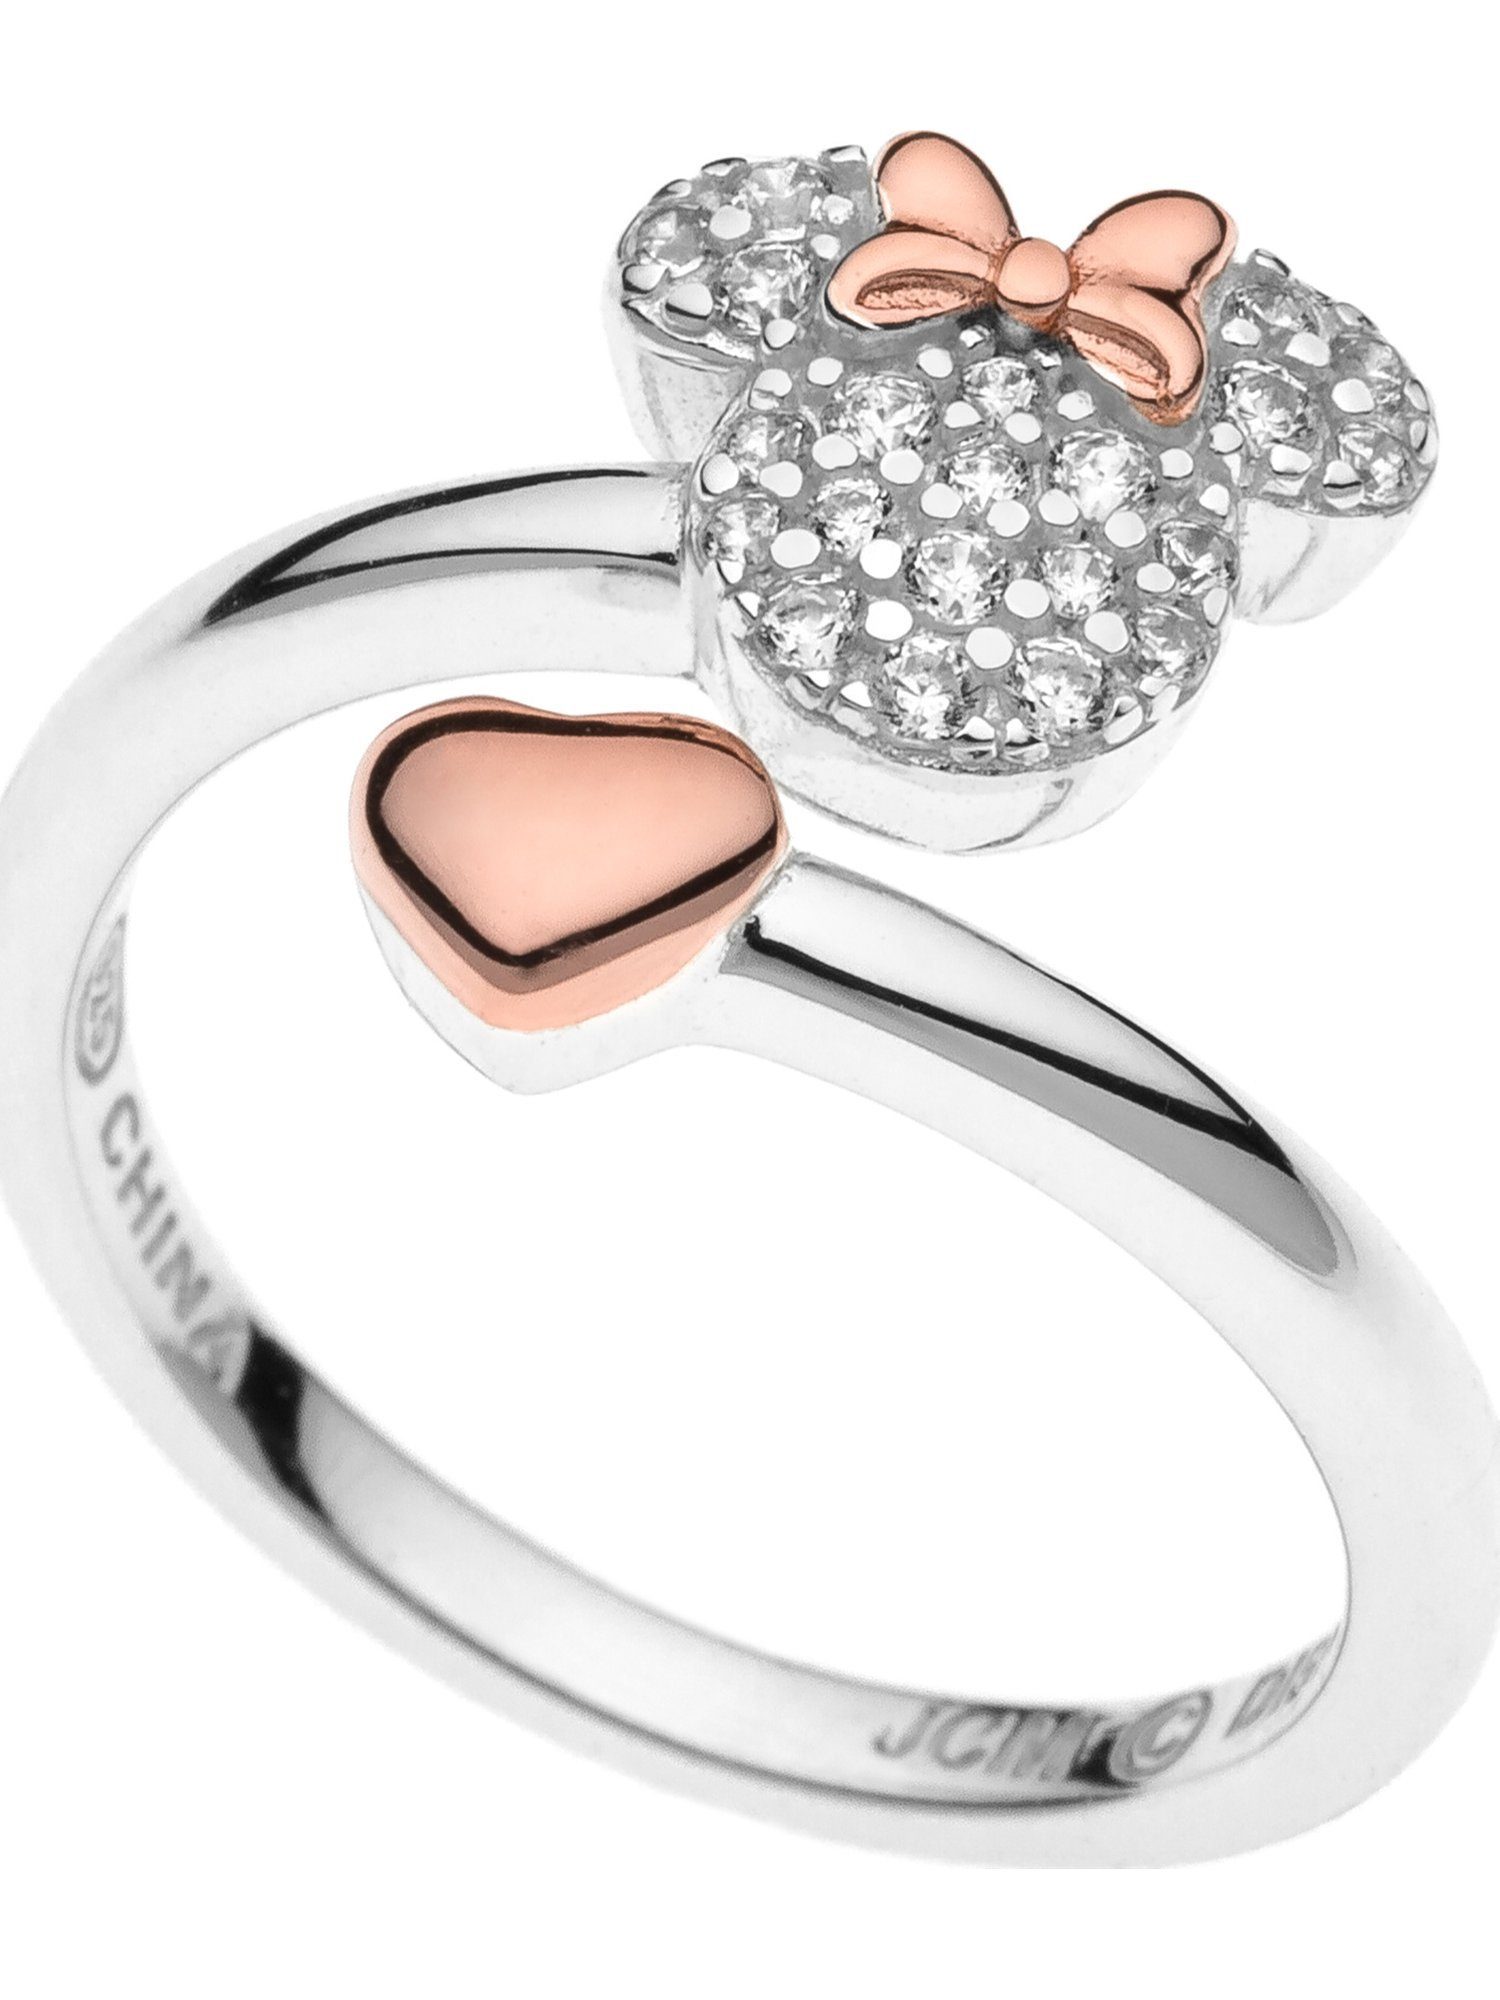 Disney Kristall Mädchen-Kinderring Silber Fingerring 925er DISNEY Kristall, Jewelry